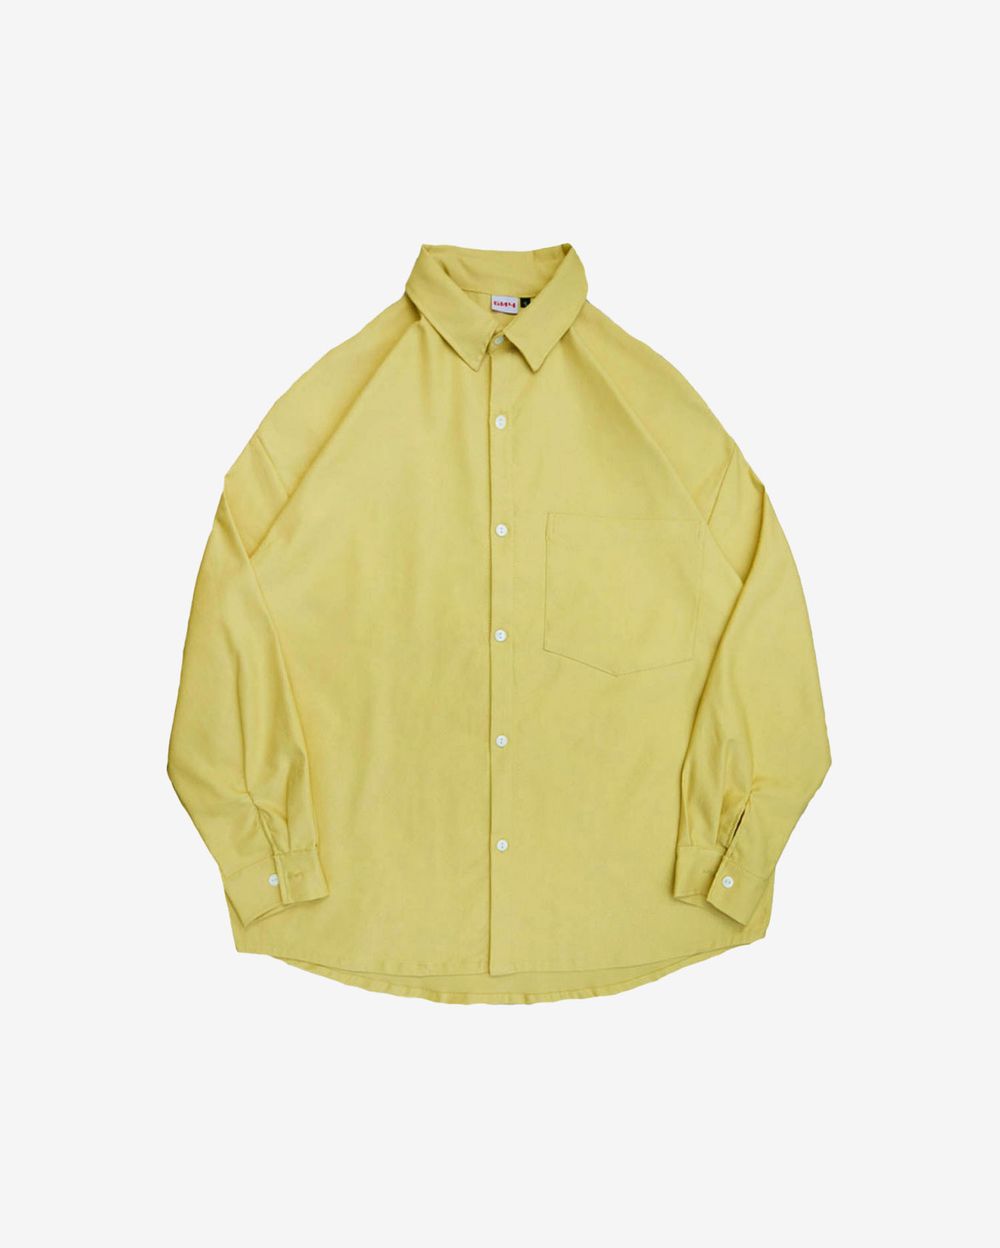 Рубашка БИЧ Плотная Хлопковая Желтая